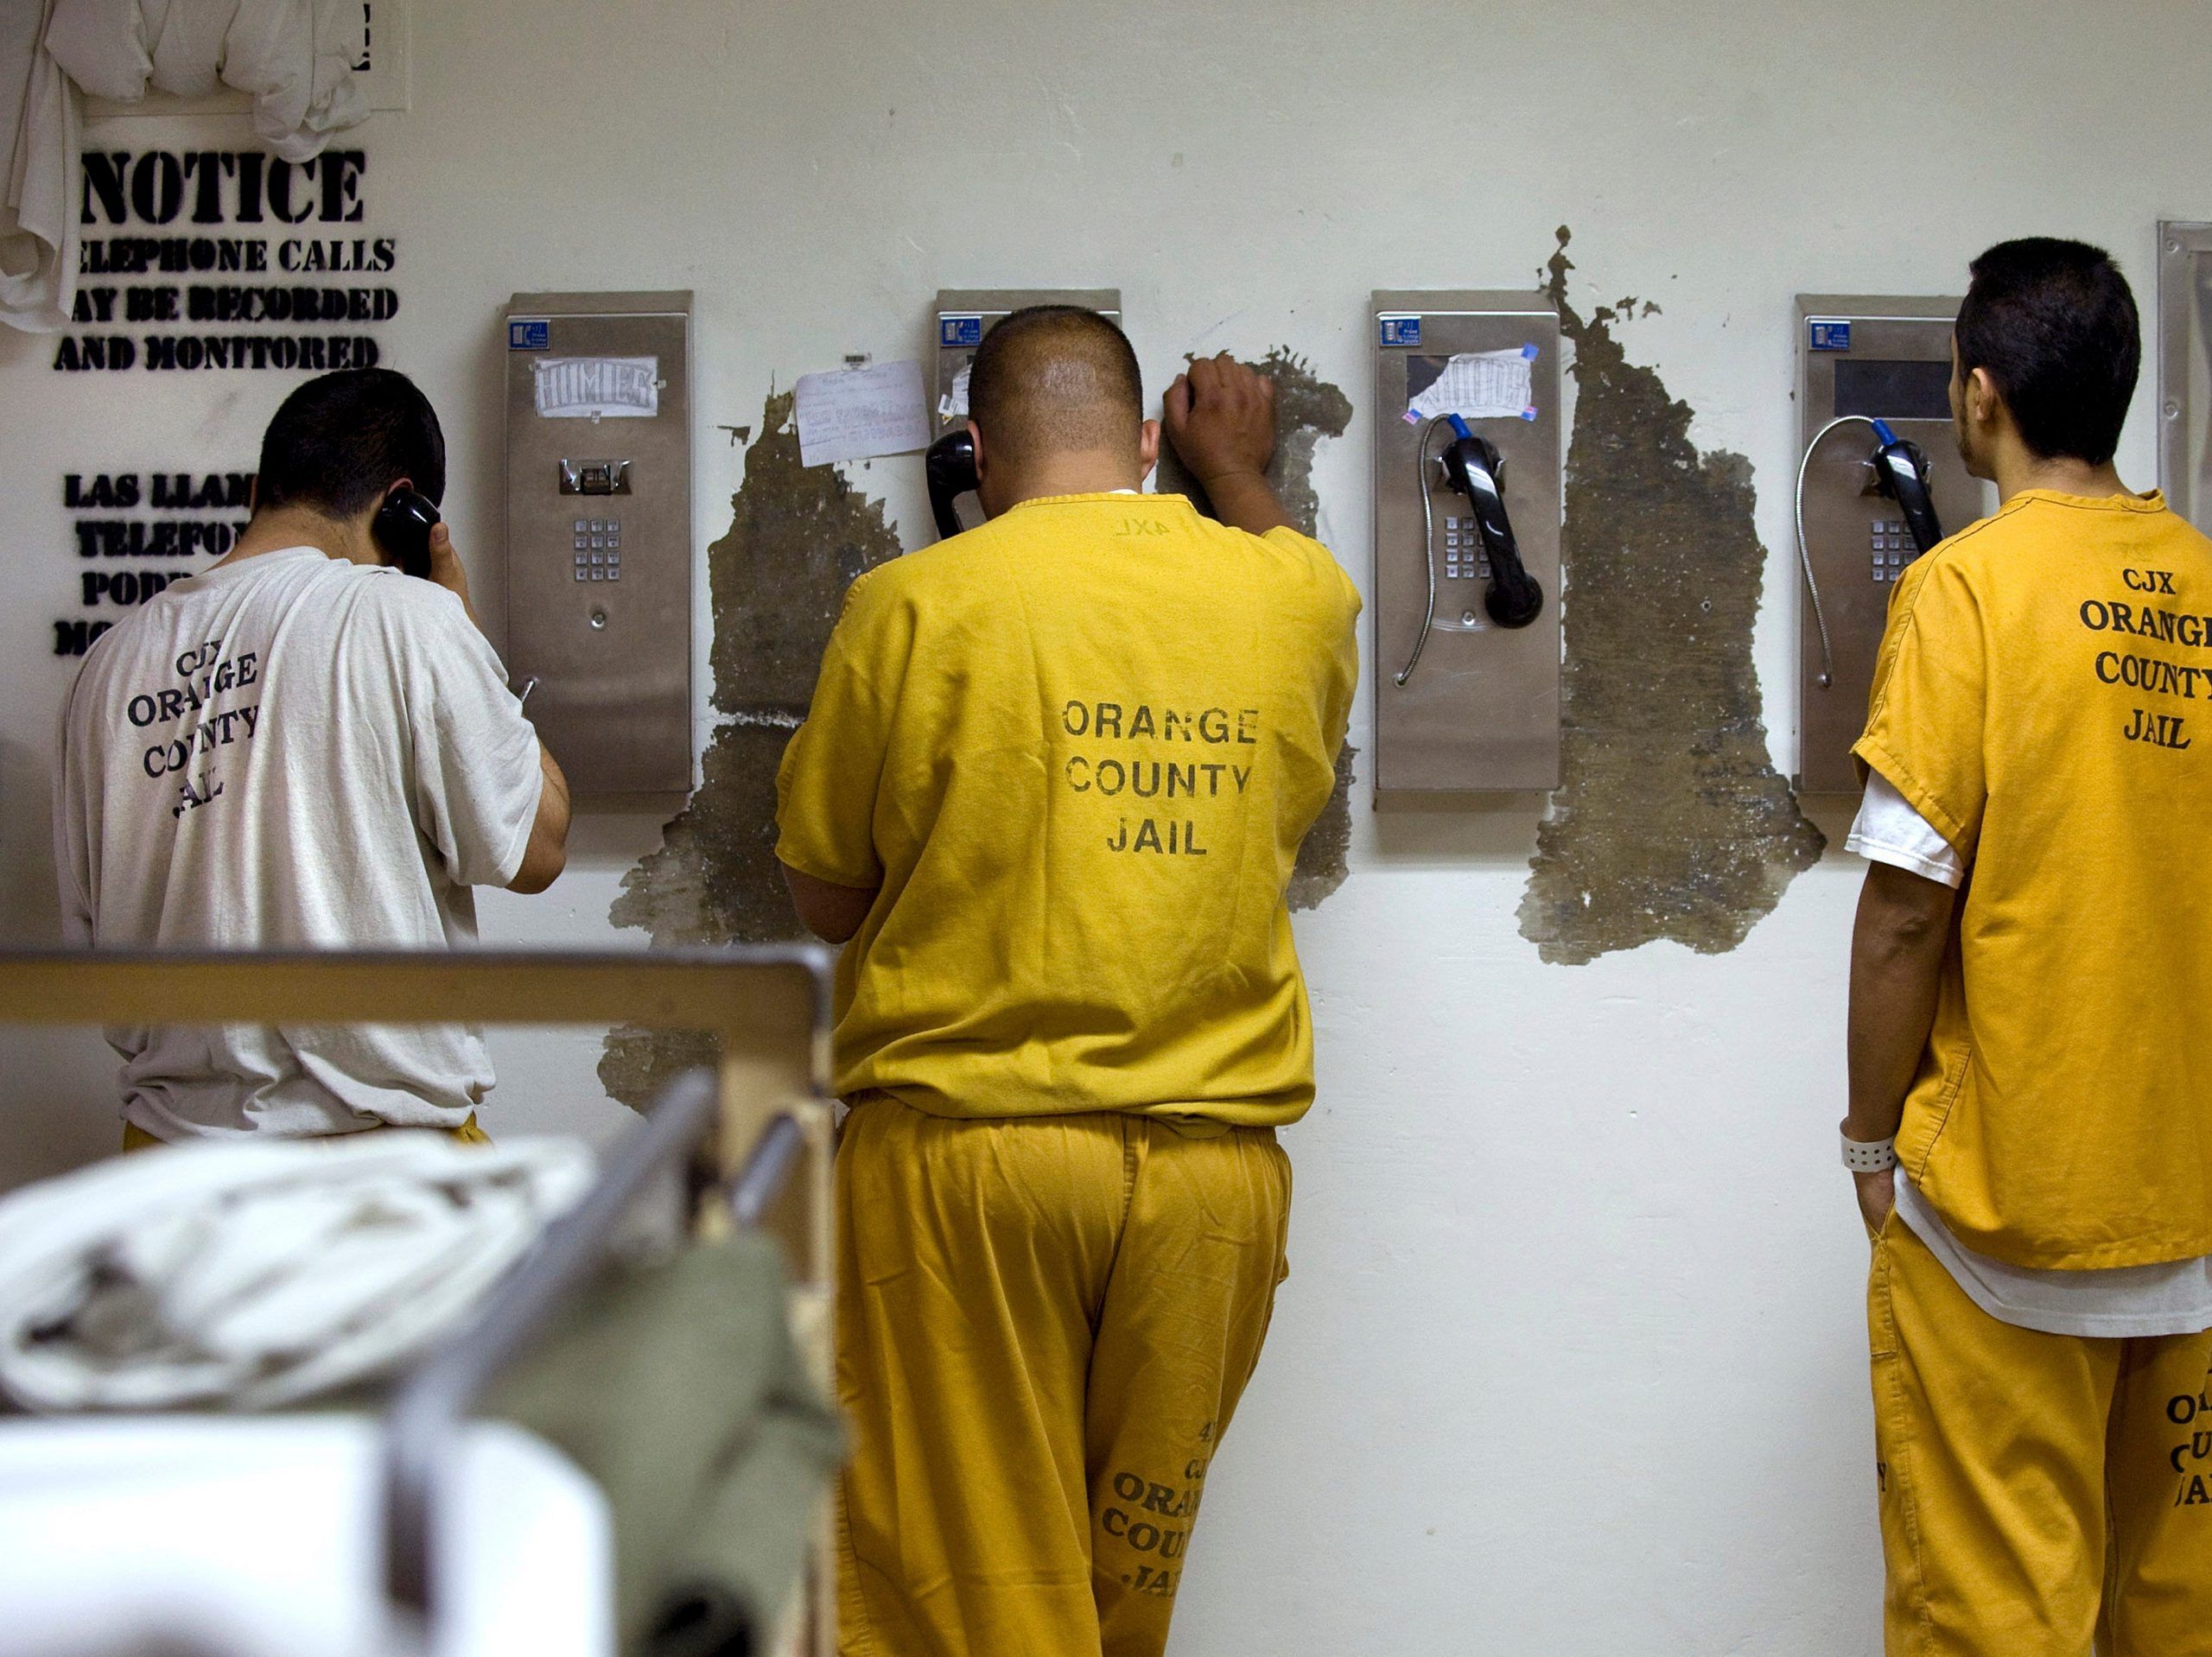 Prison inmates making phone calls